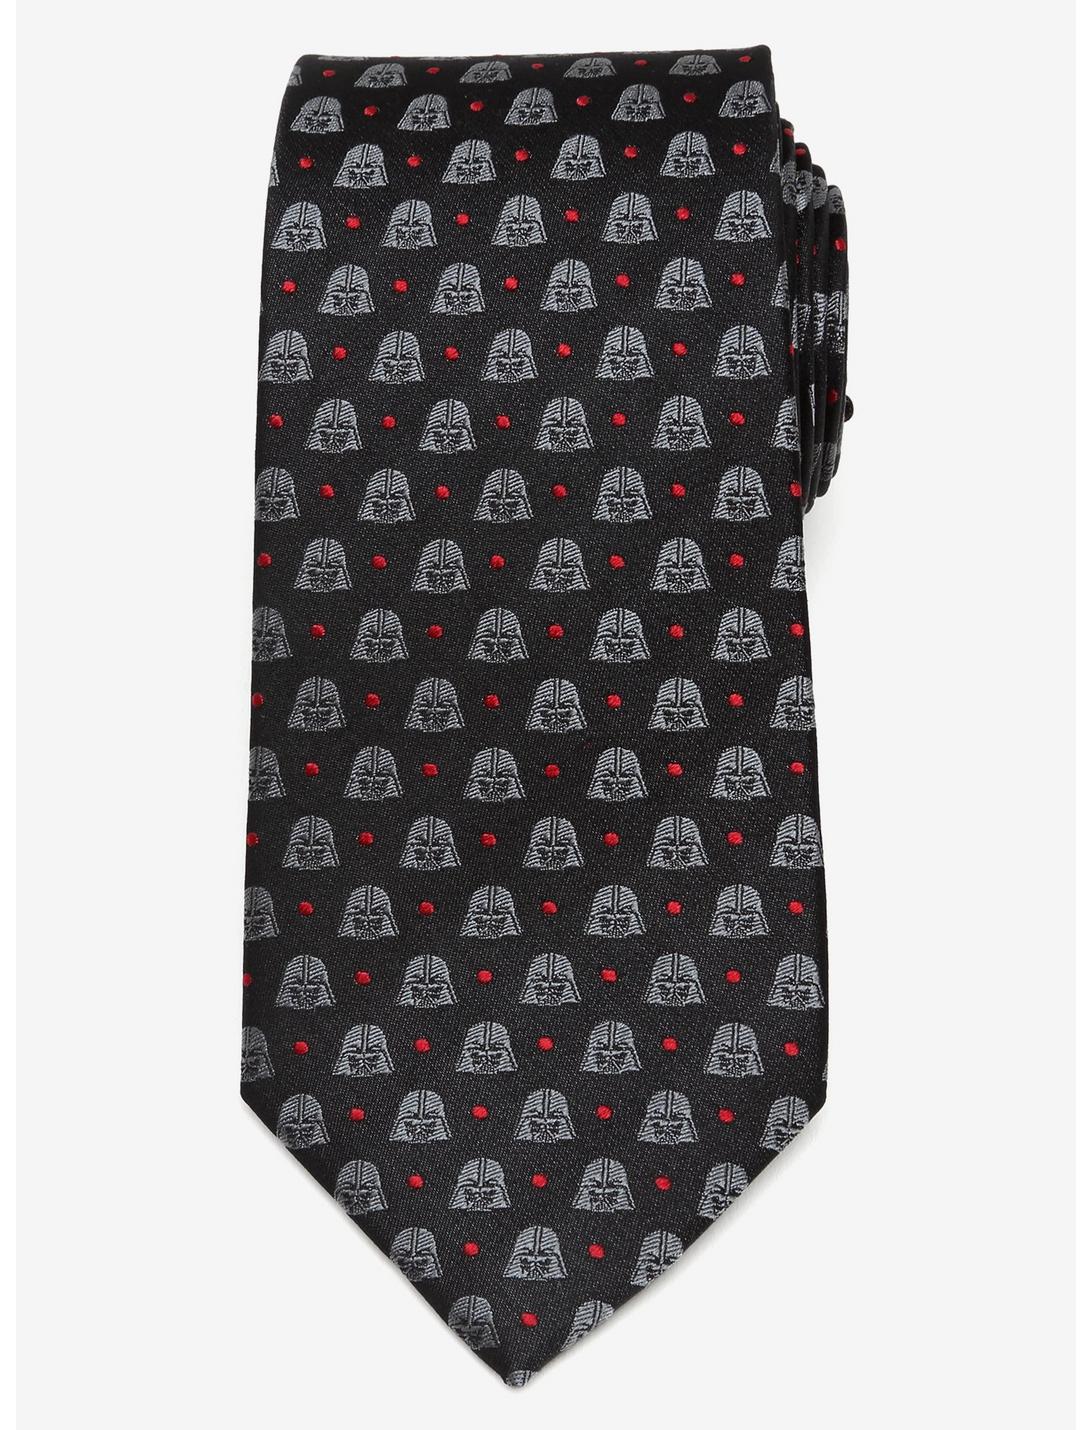 Star Wars Darth Vader Black Dot Tie, , hi-res